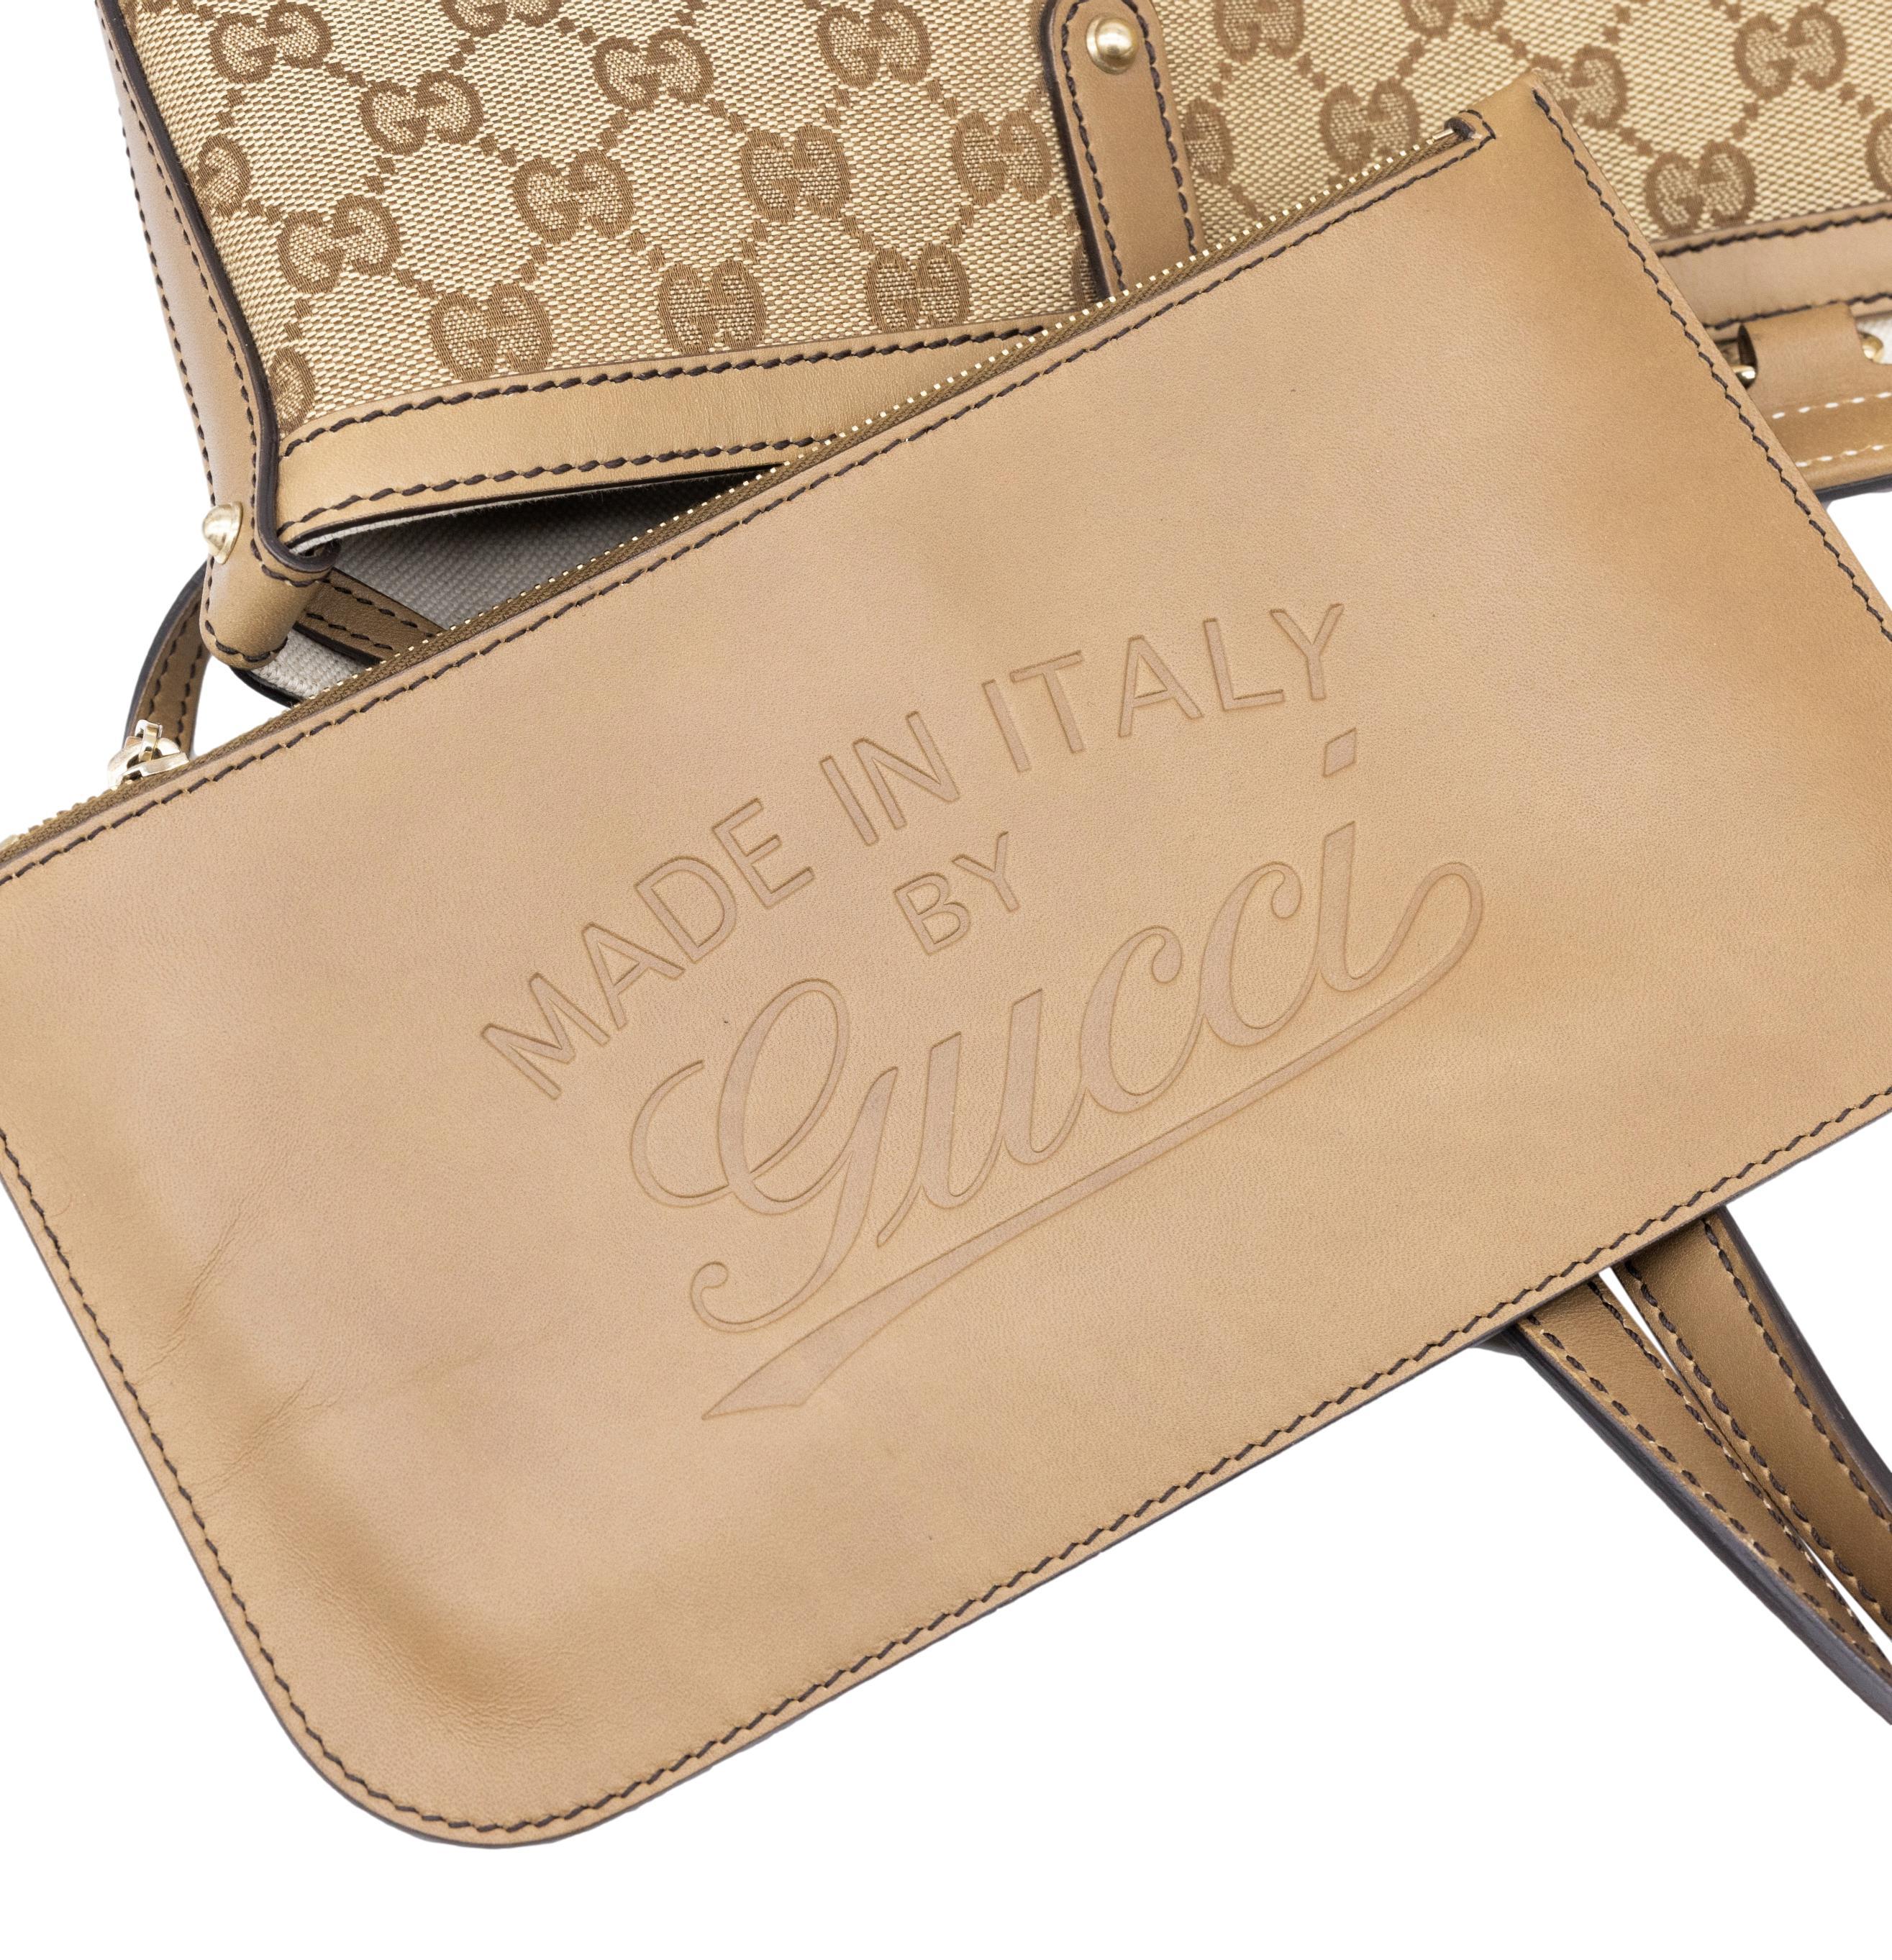 Gucci GG Monogram Supreme Canvas Tan Tote Shoulder Medium Craft Bag 4